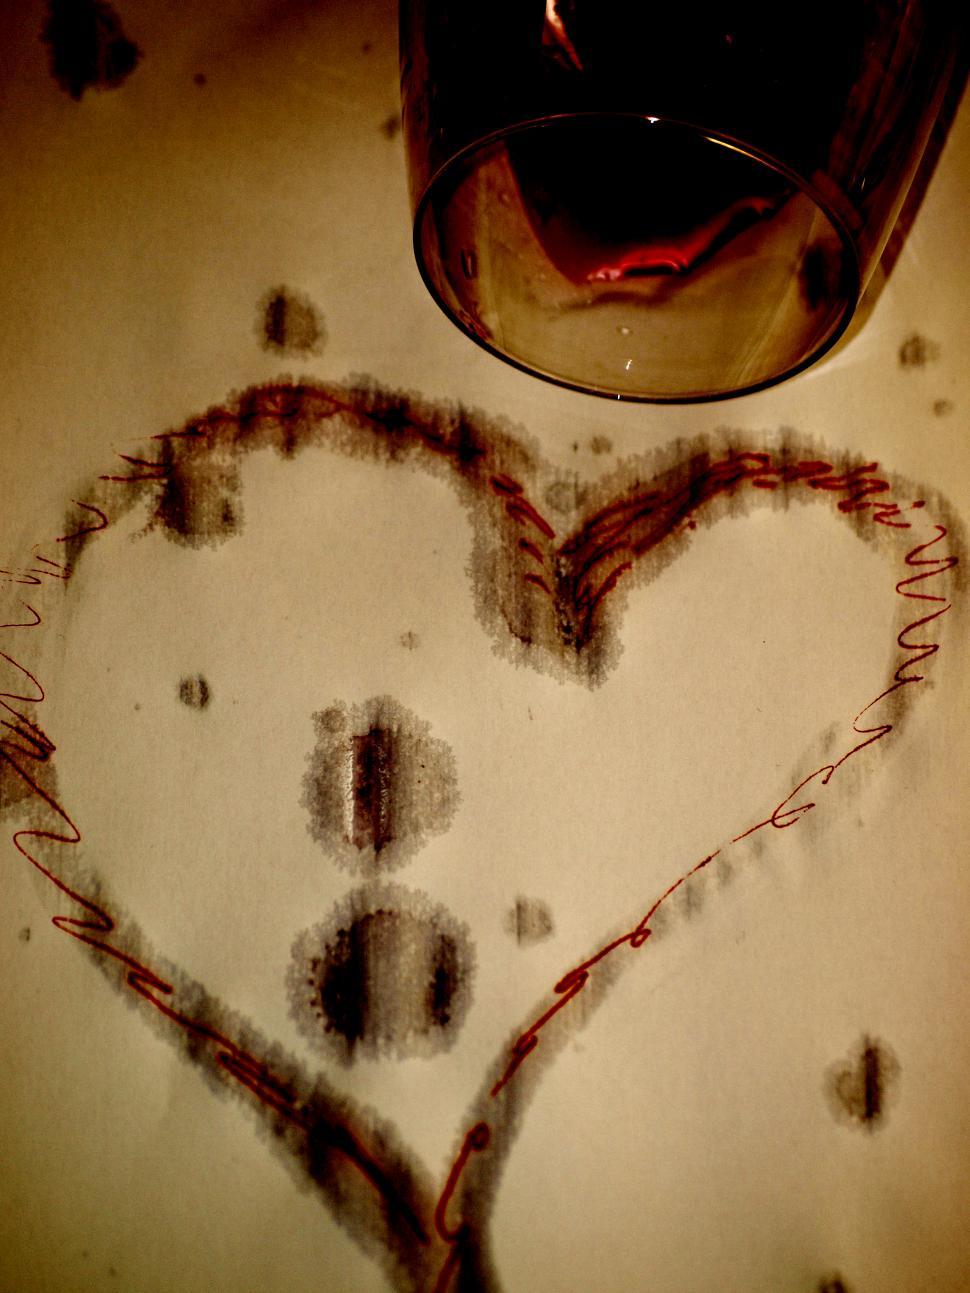 Free Image of Spilled wine valentine 